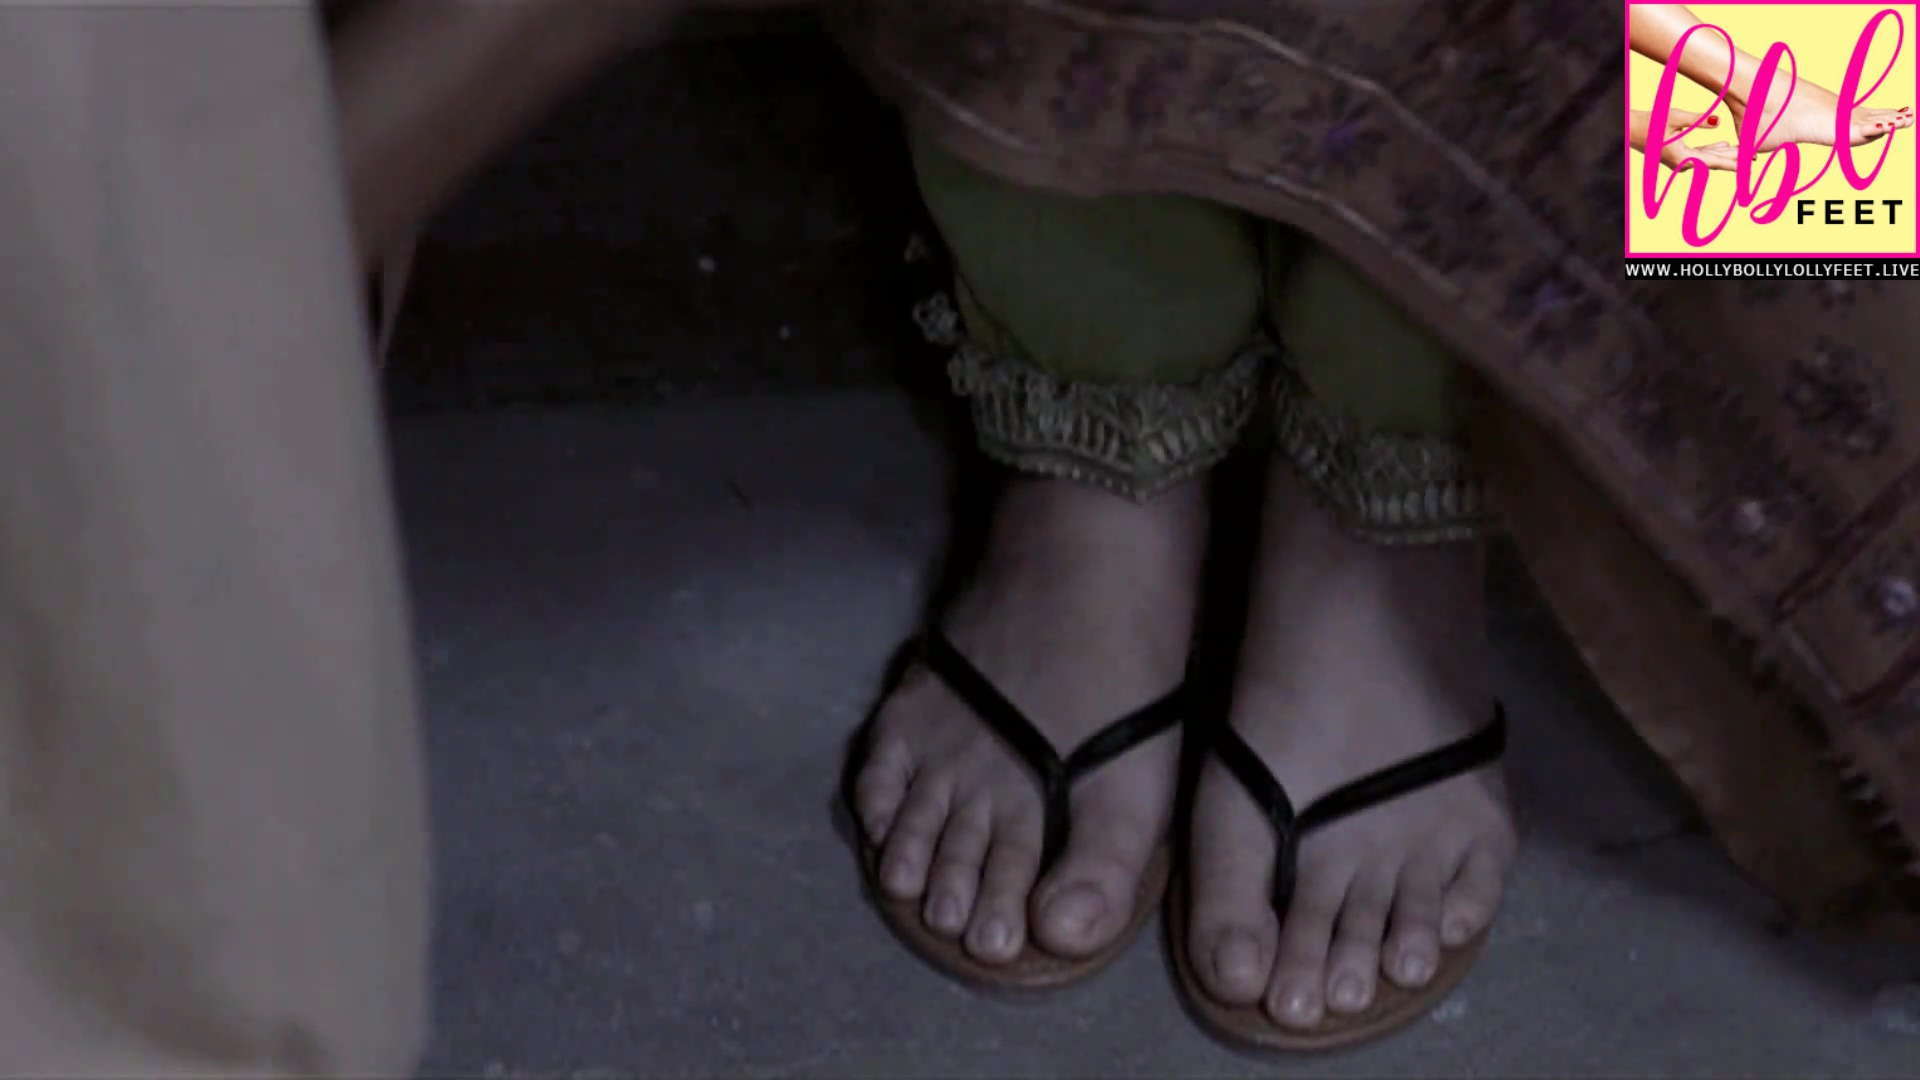 People who liked Arij Fatyma's feet, also liked.